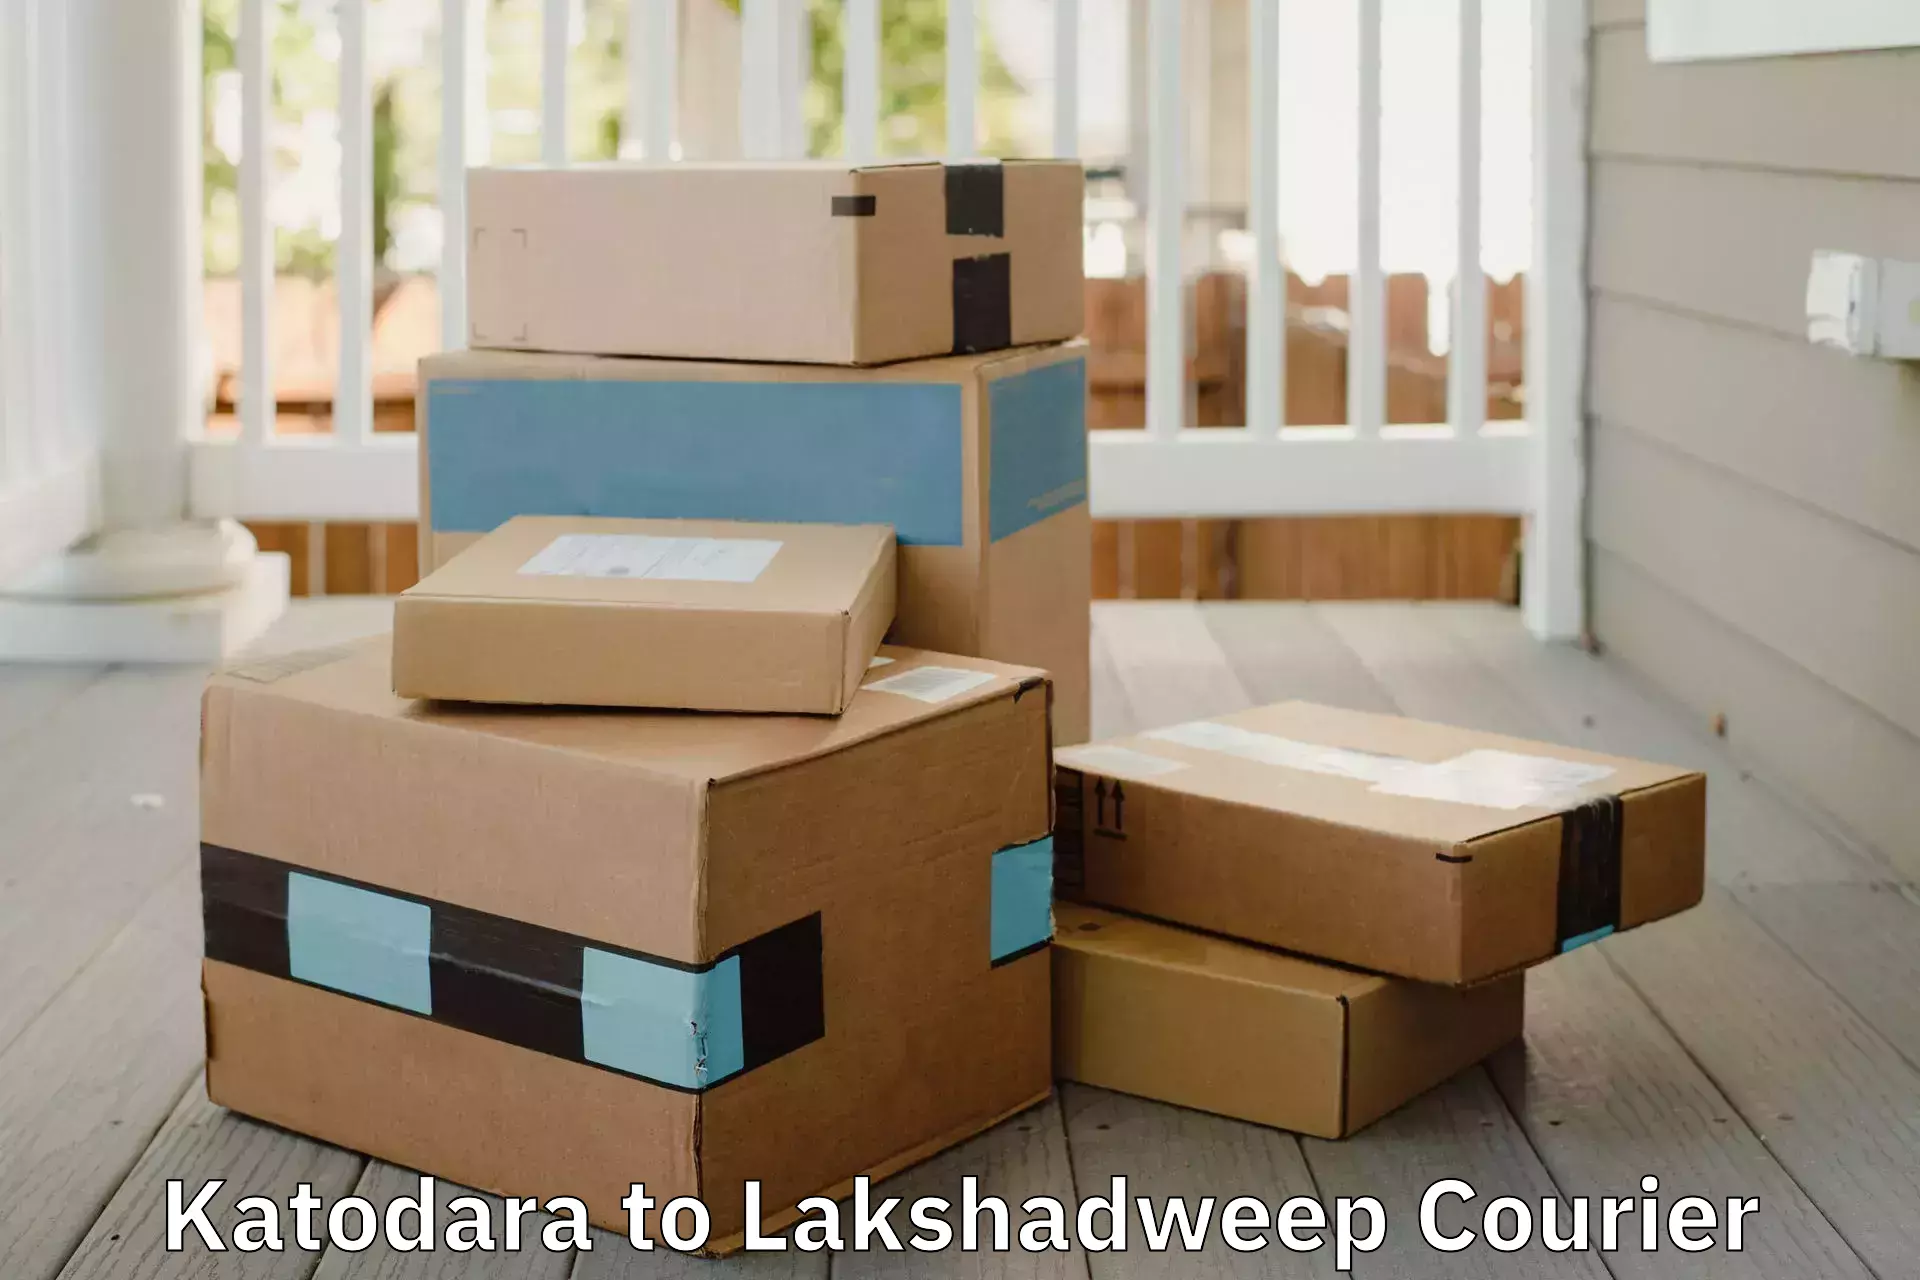 Professional moving assistance in Katodara to Lakshadweep